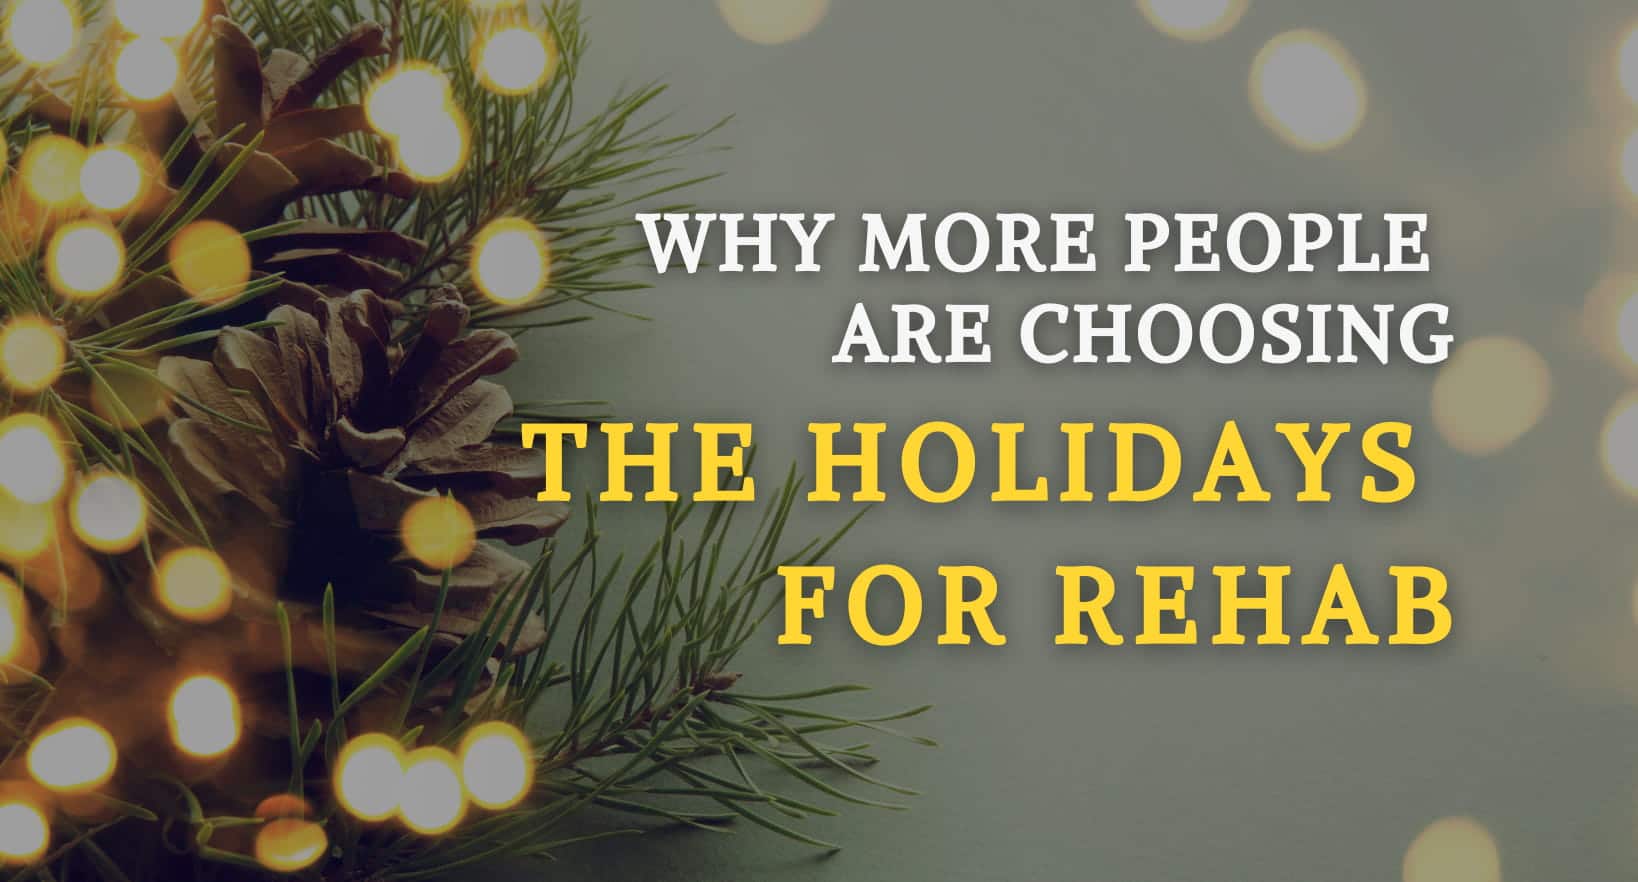 Choosing Rehab Over The Holidays